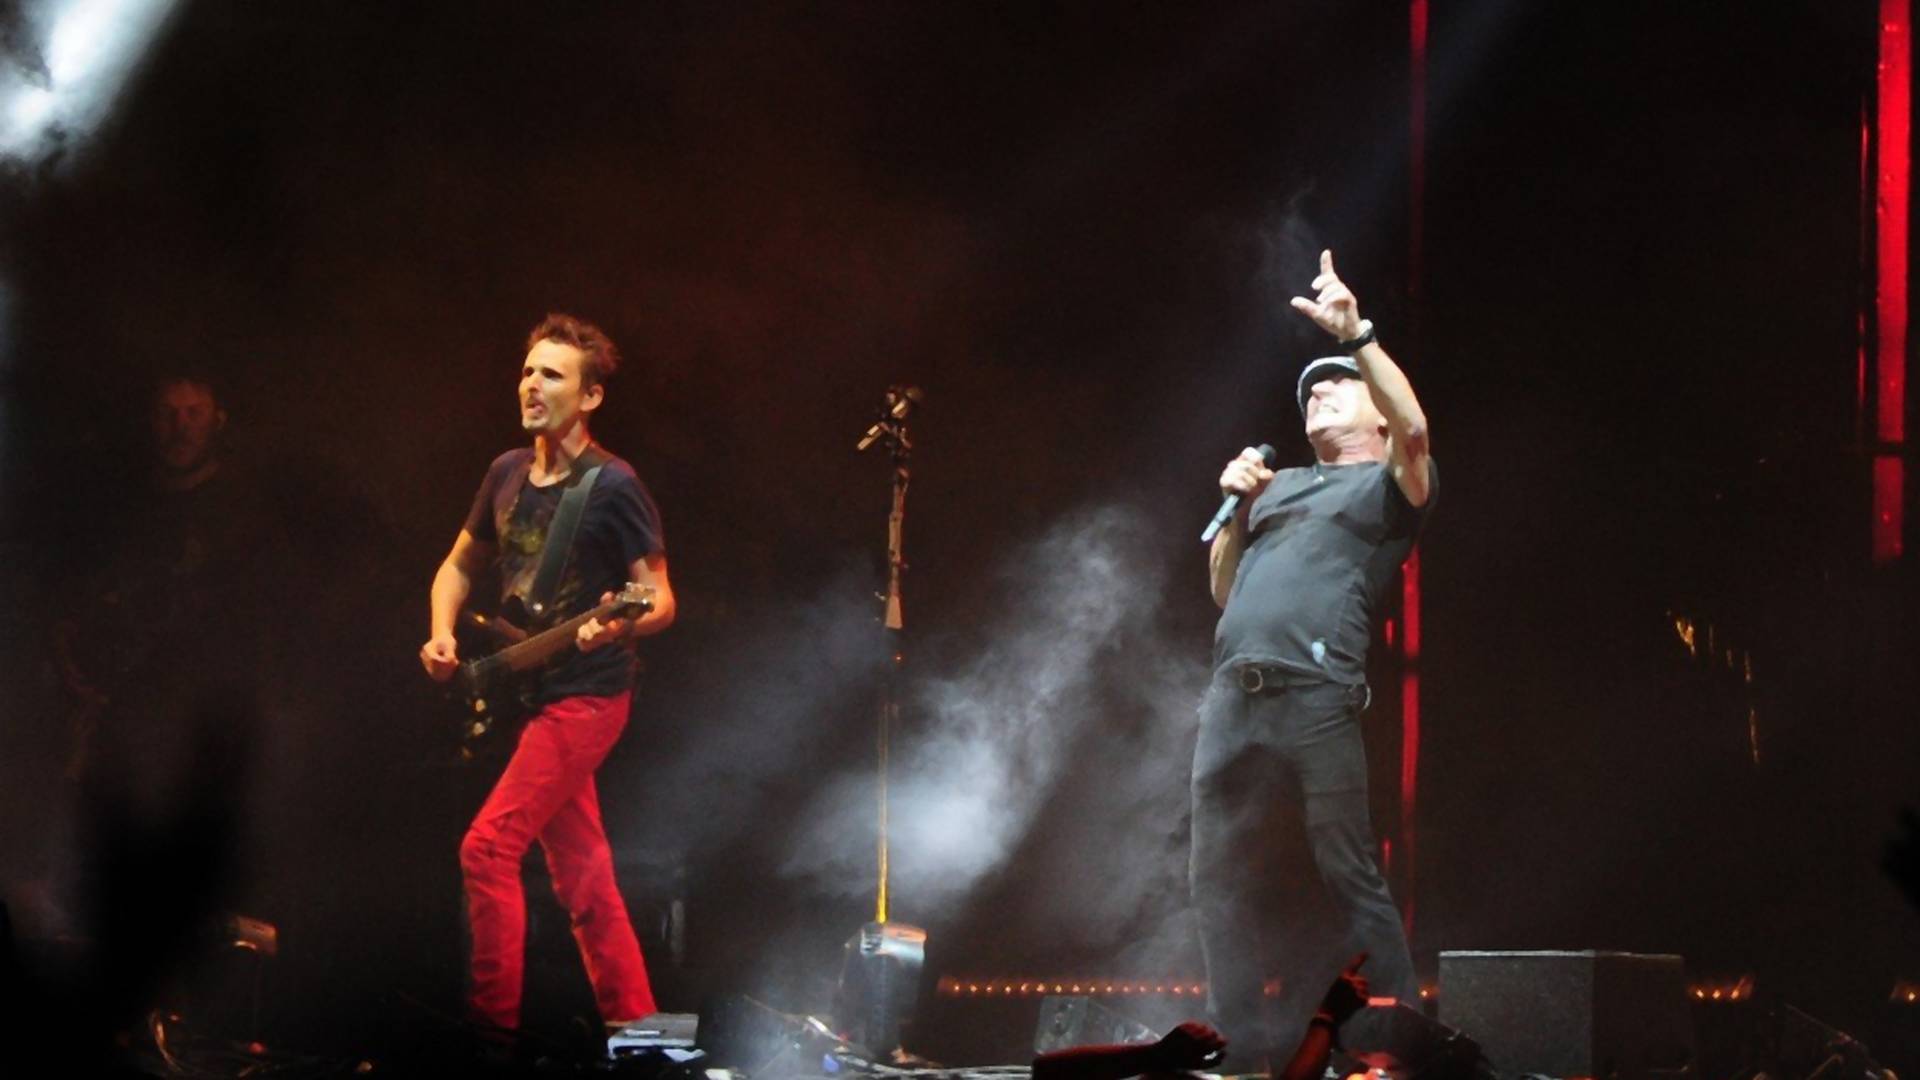 Brajan Džonson iz AC/DC nastupio sa grupom Muse